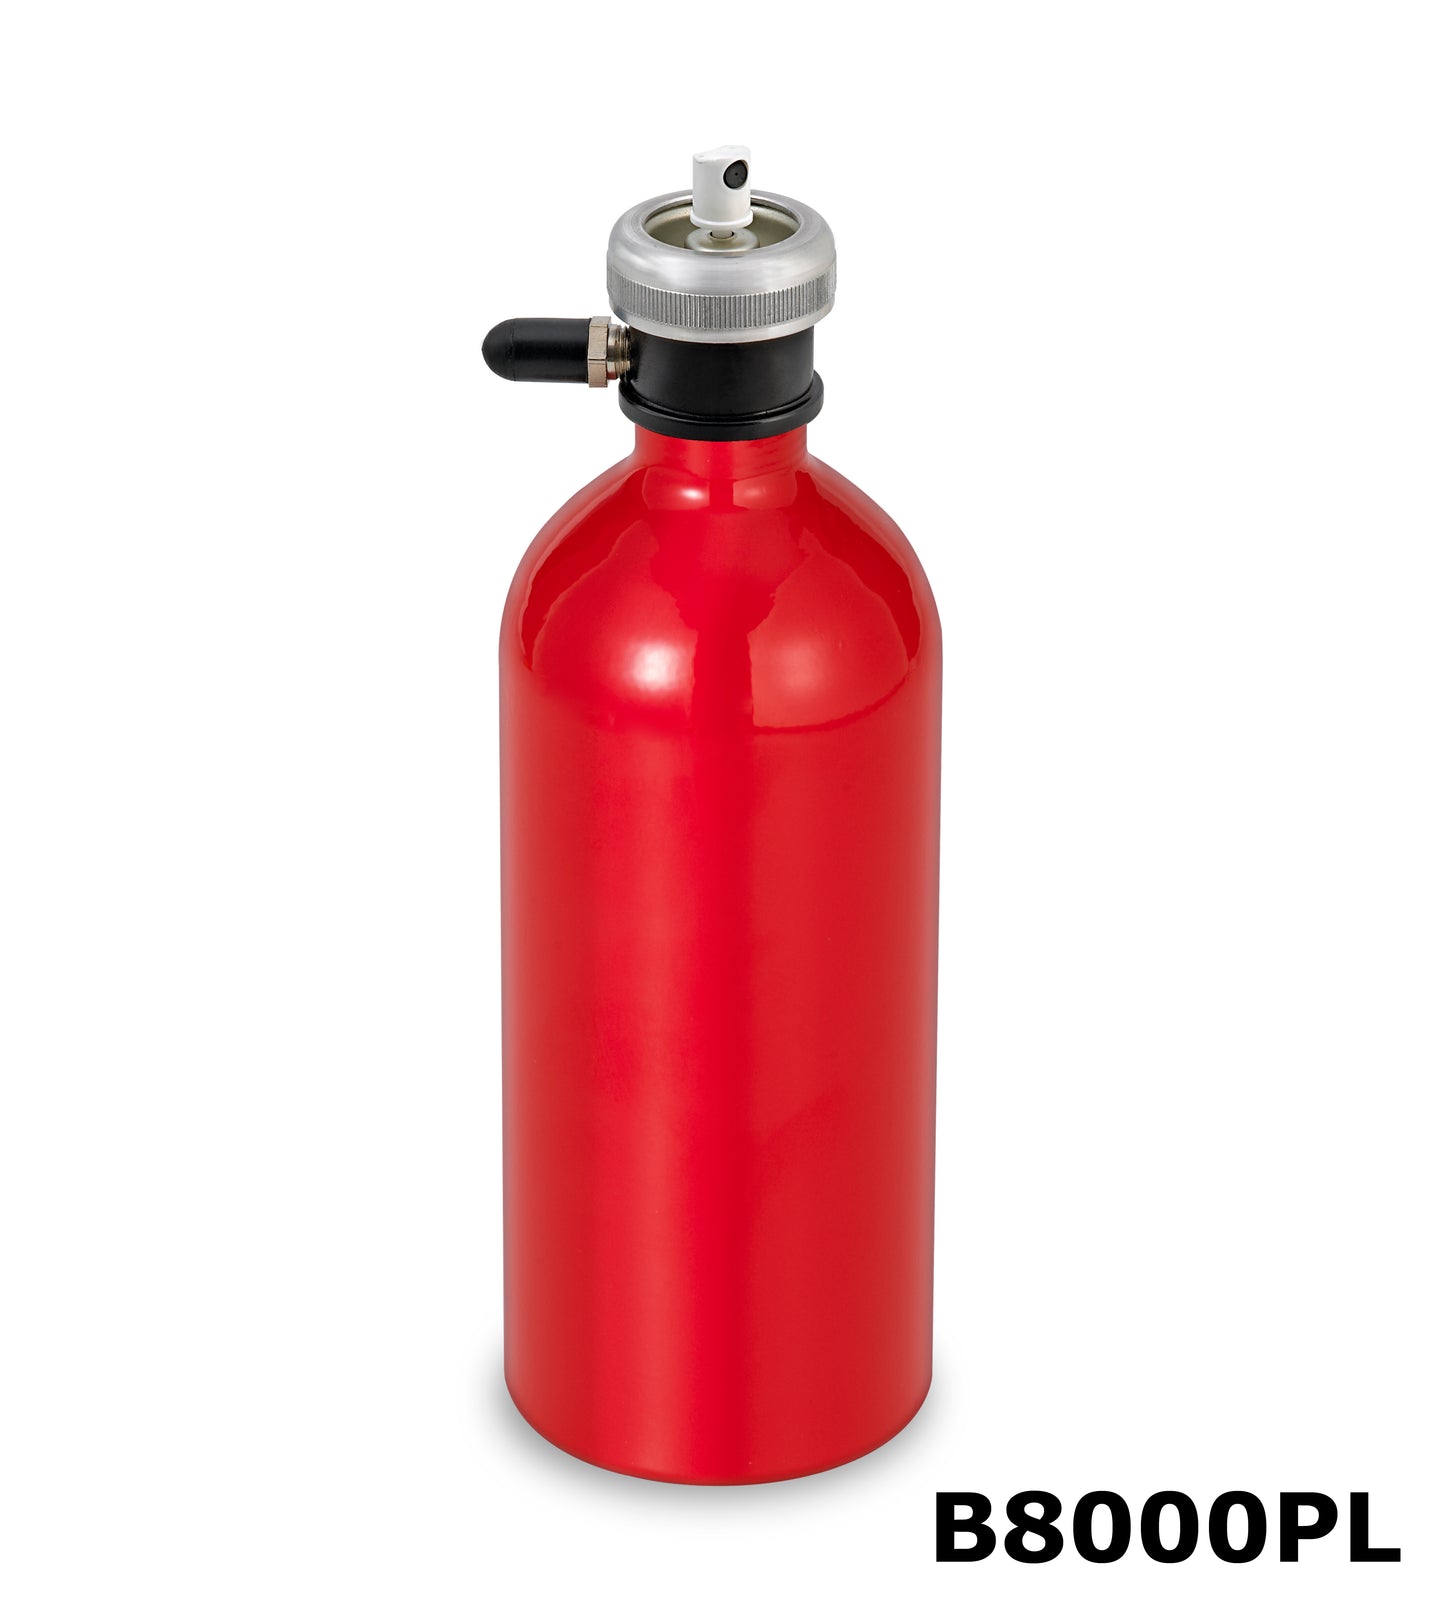 Model B Sprayer B8000PL